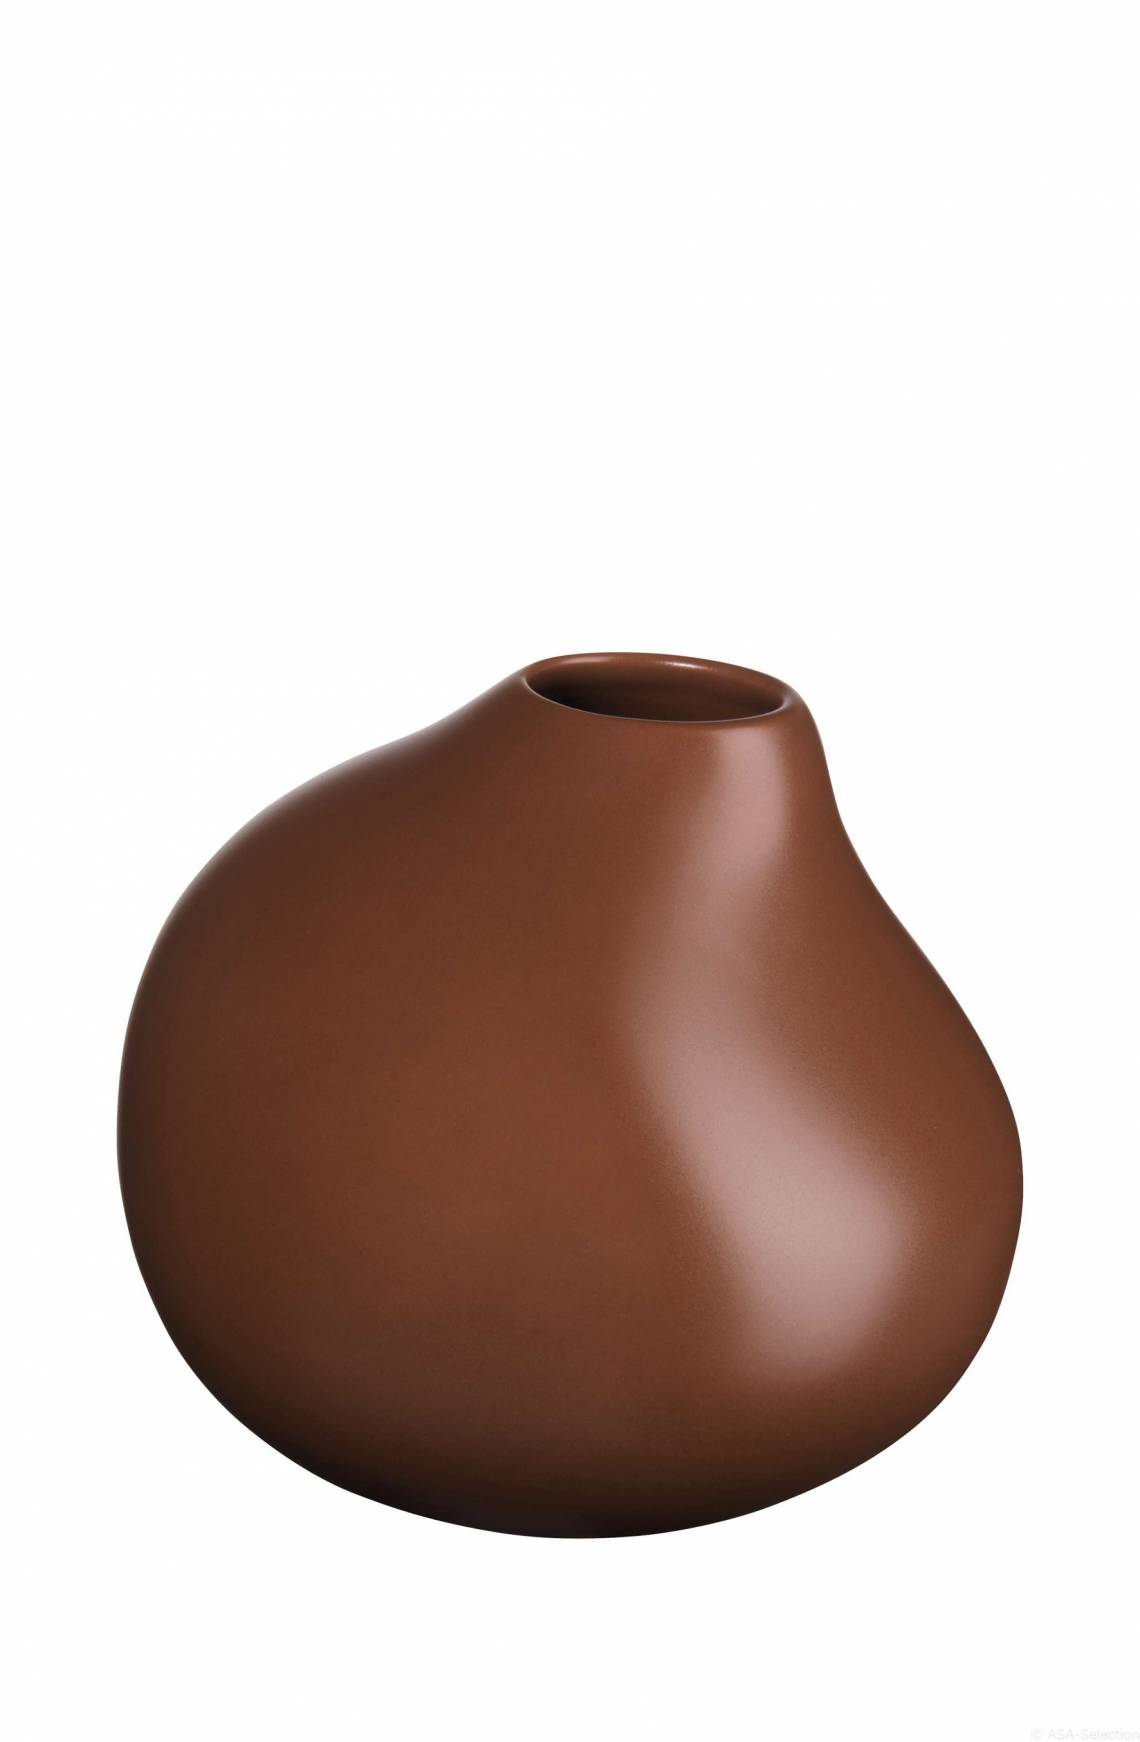 ASA - Calabash Vase 9268153 